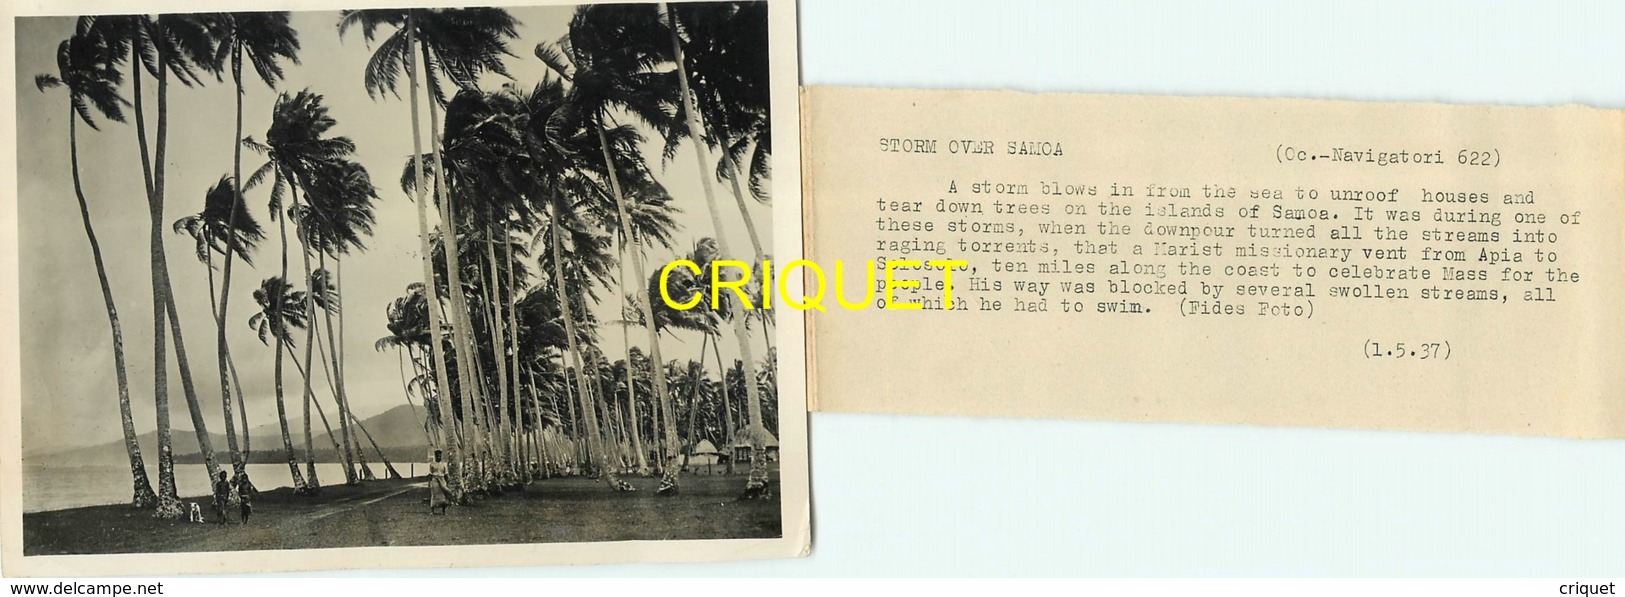 Samoa, Grande Photo Originale, Village Ern Bord De Mer, Beau Document, 1937 - Samoa